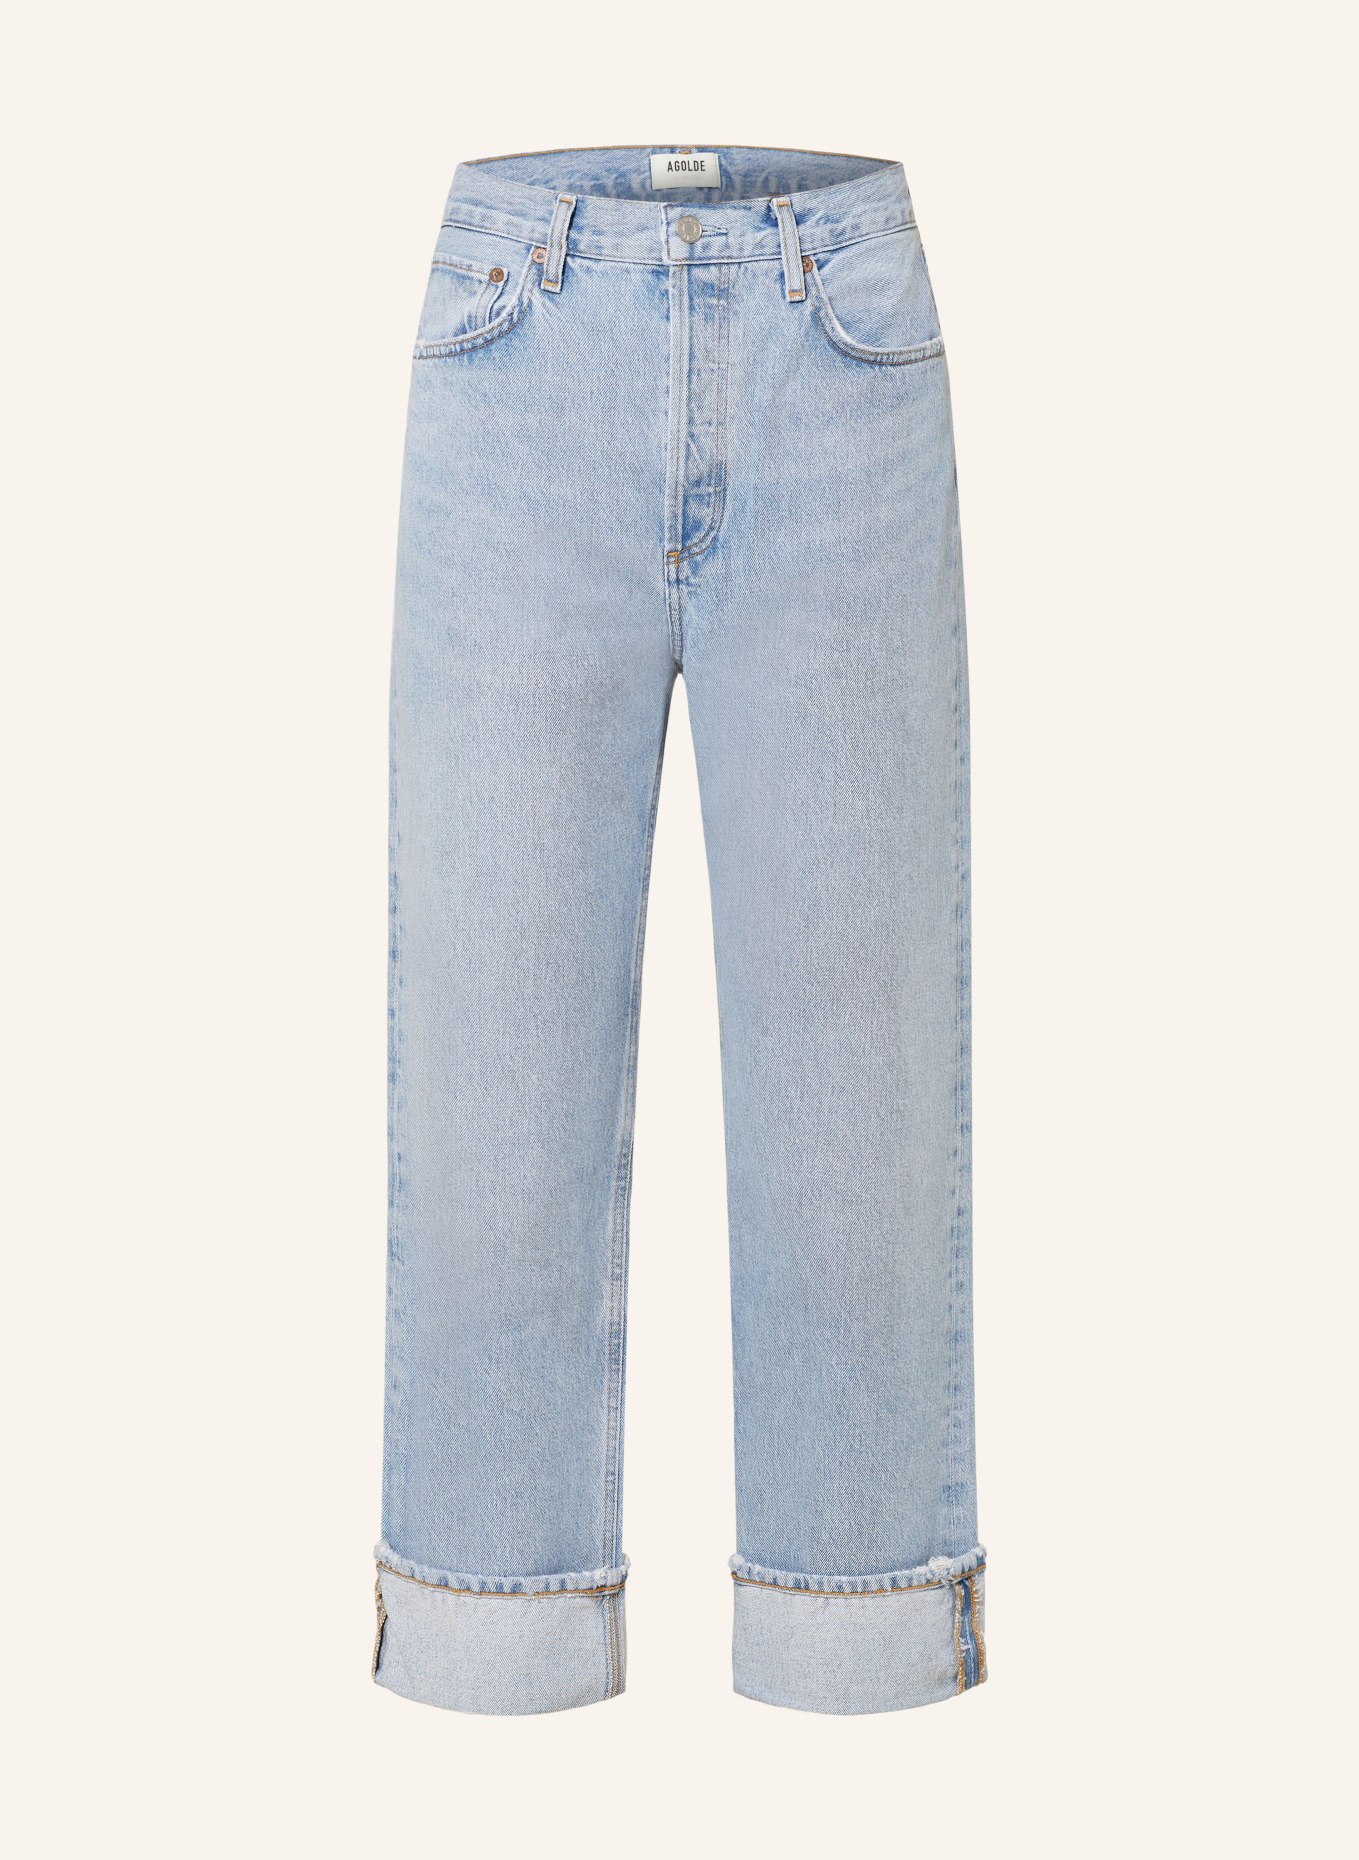 AGOLDE Straight Jeans FRAN, Farbe: force vint marbled ind (Bild 1)